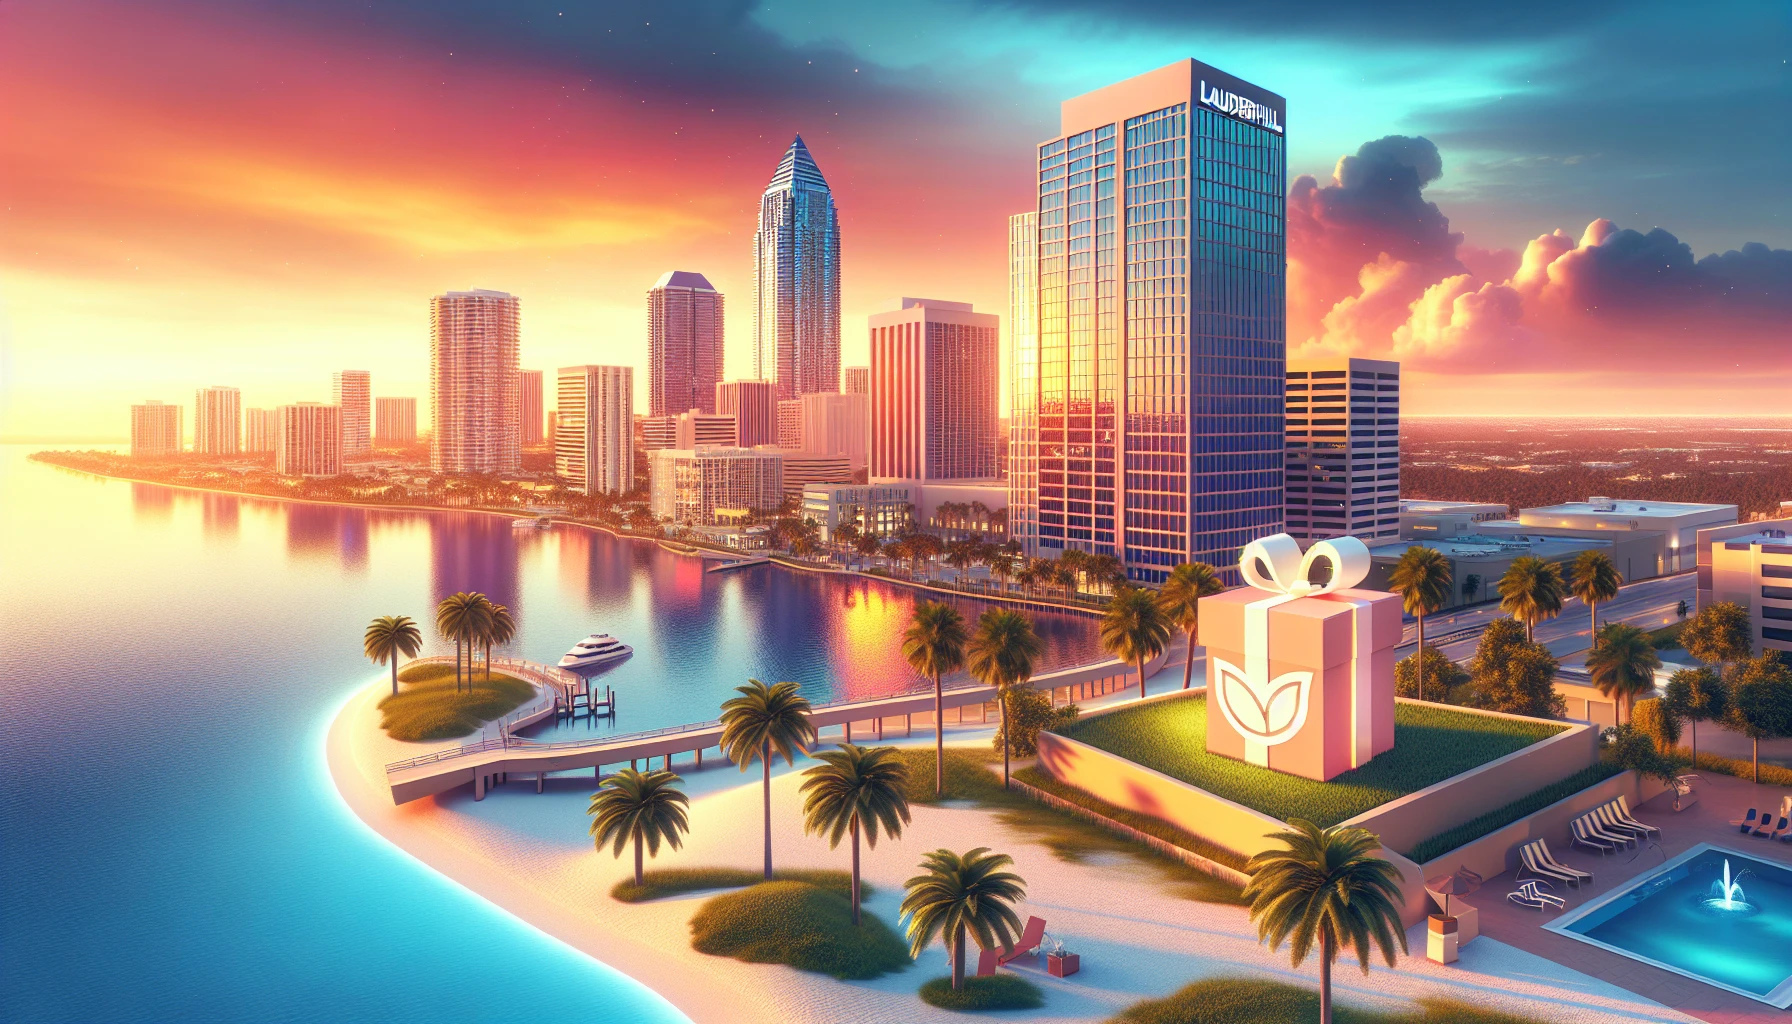 Illustration of a city skyline in Lauderhill, Florida